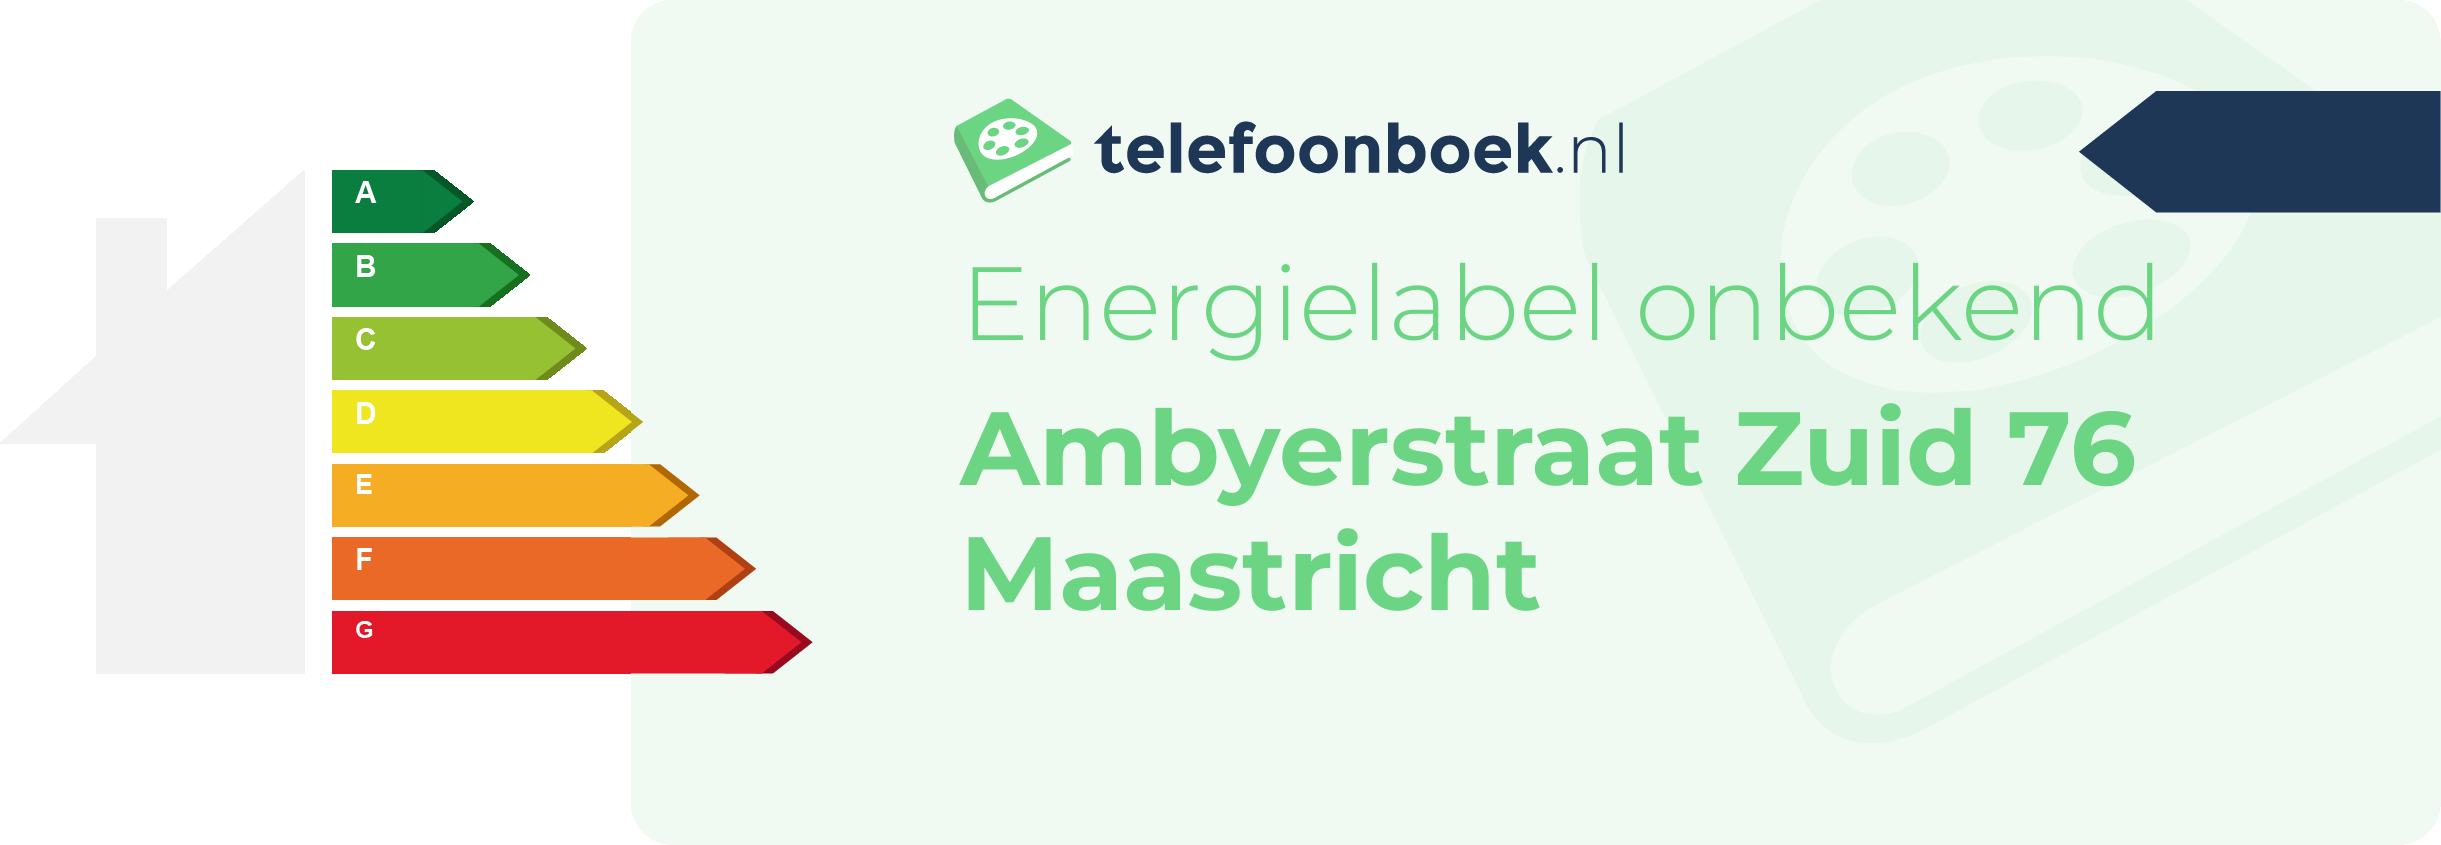 Energielabel Ambyerstraat Zuid 76 Maastricht